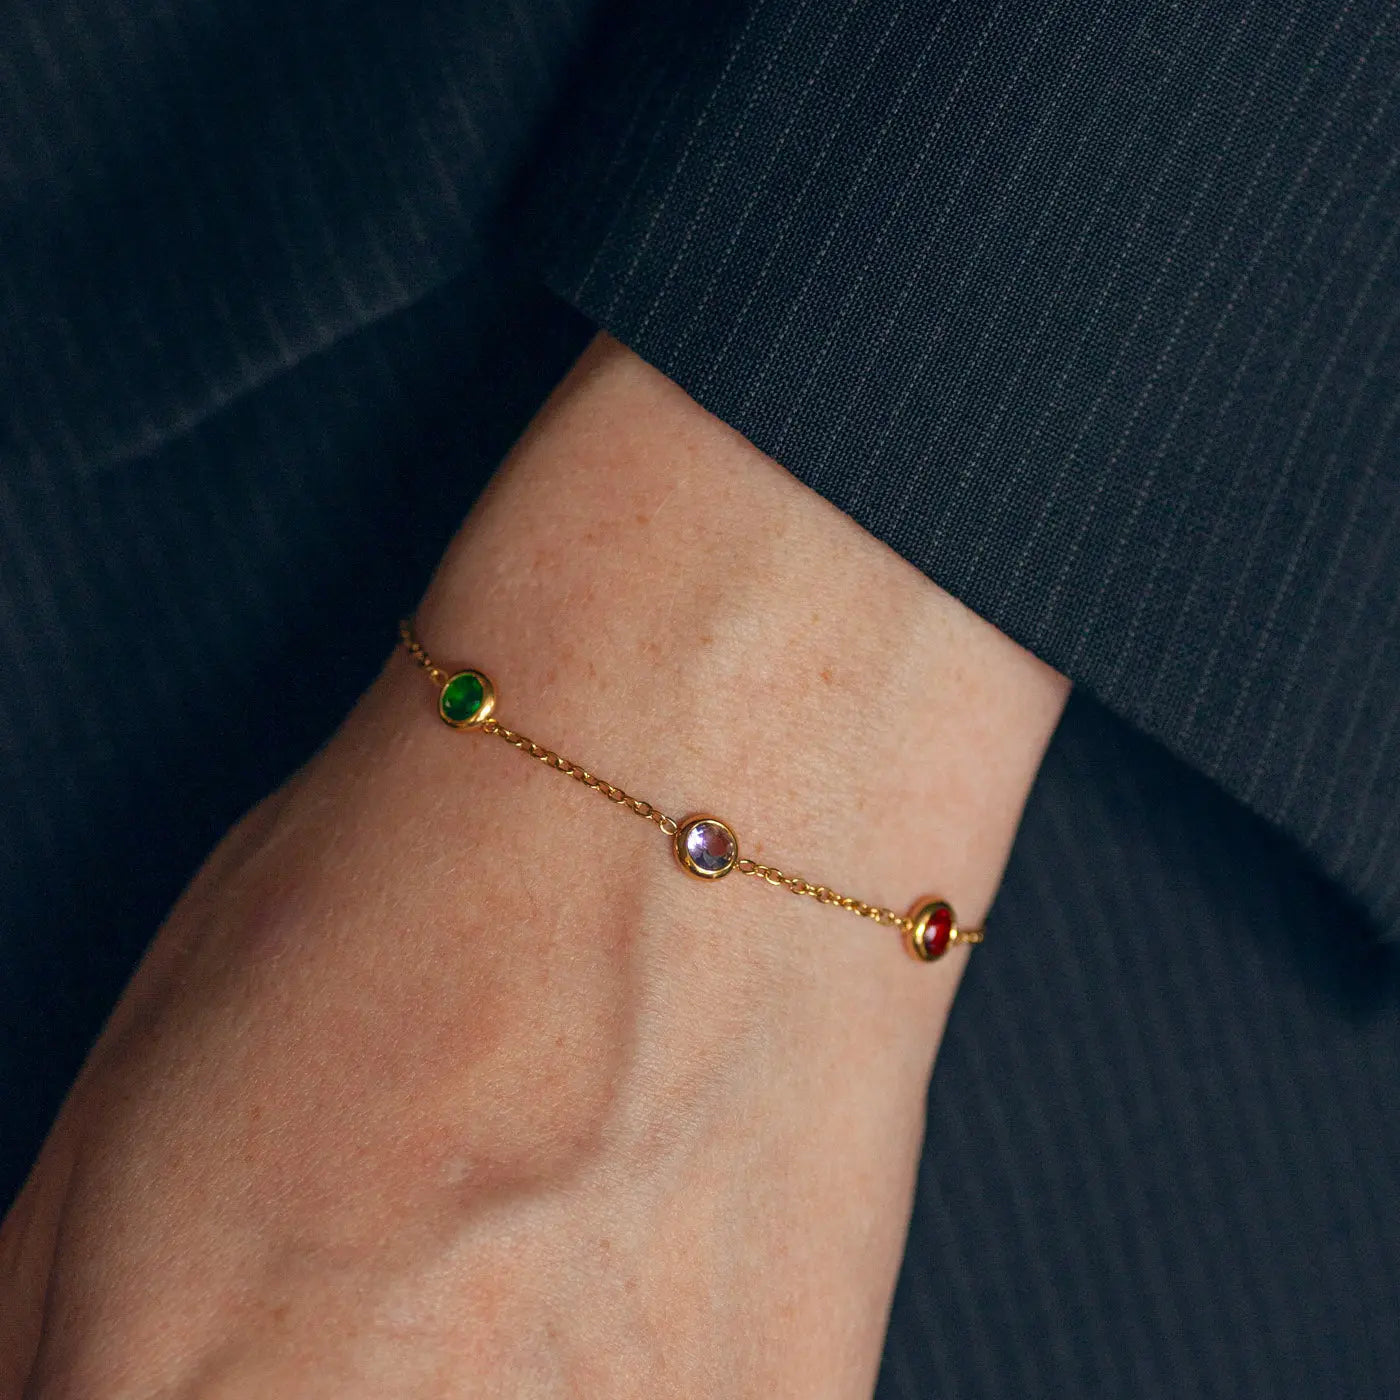 Michelle - Bracelet chaîne en cristal multicolore en acier inoxydable